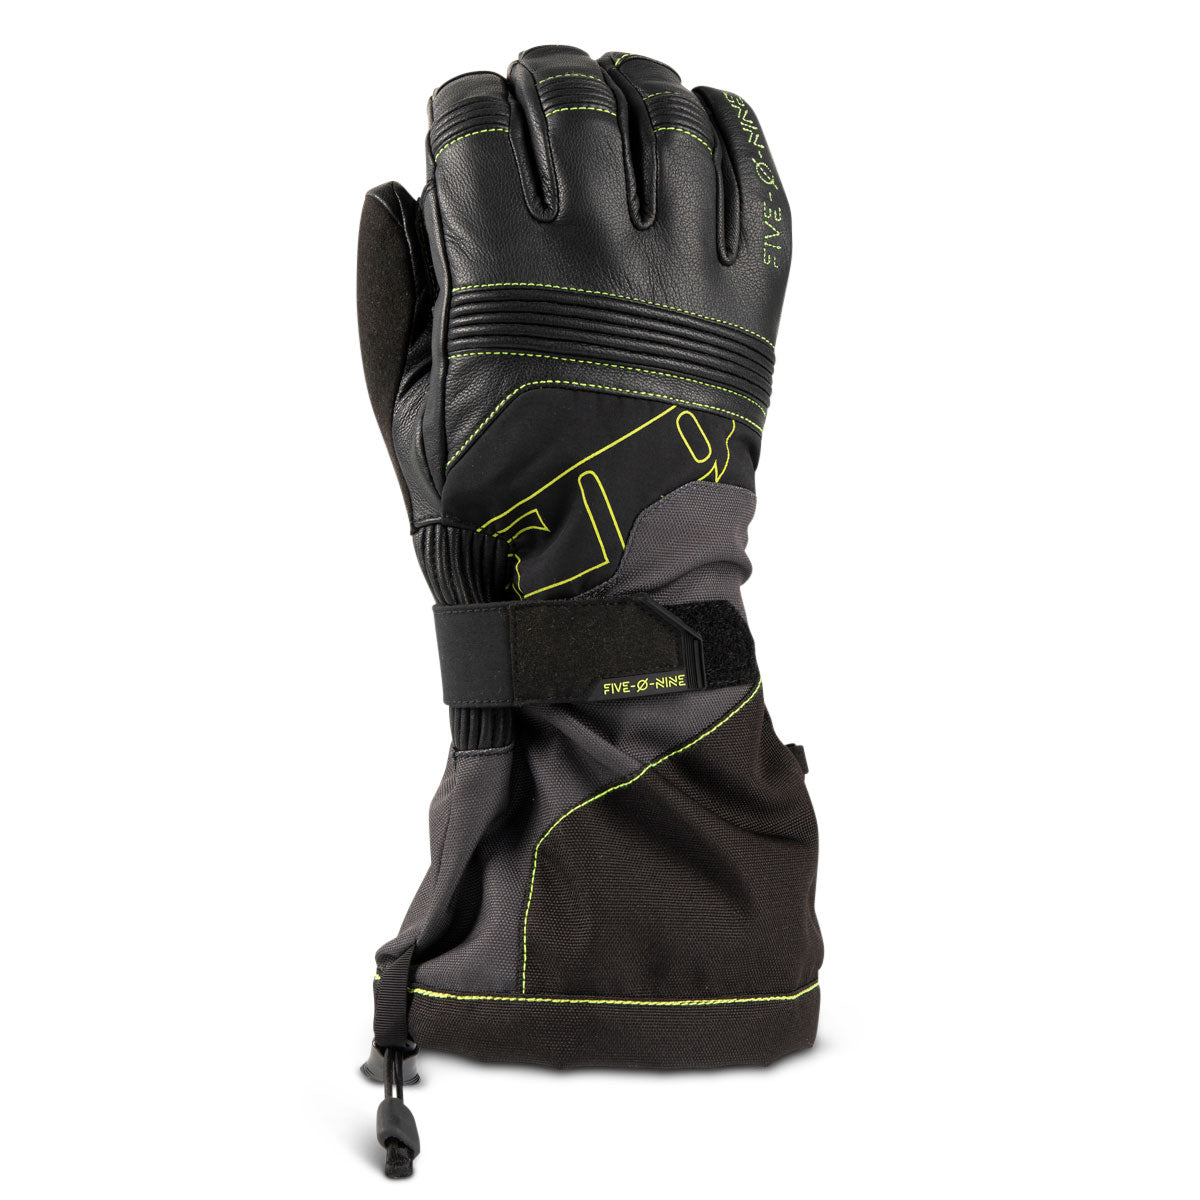 Range Insulated Gloves